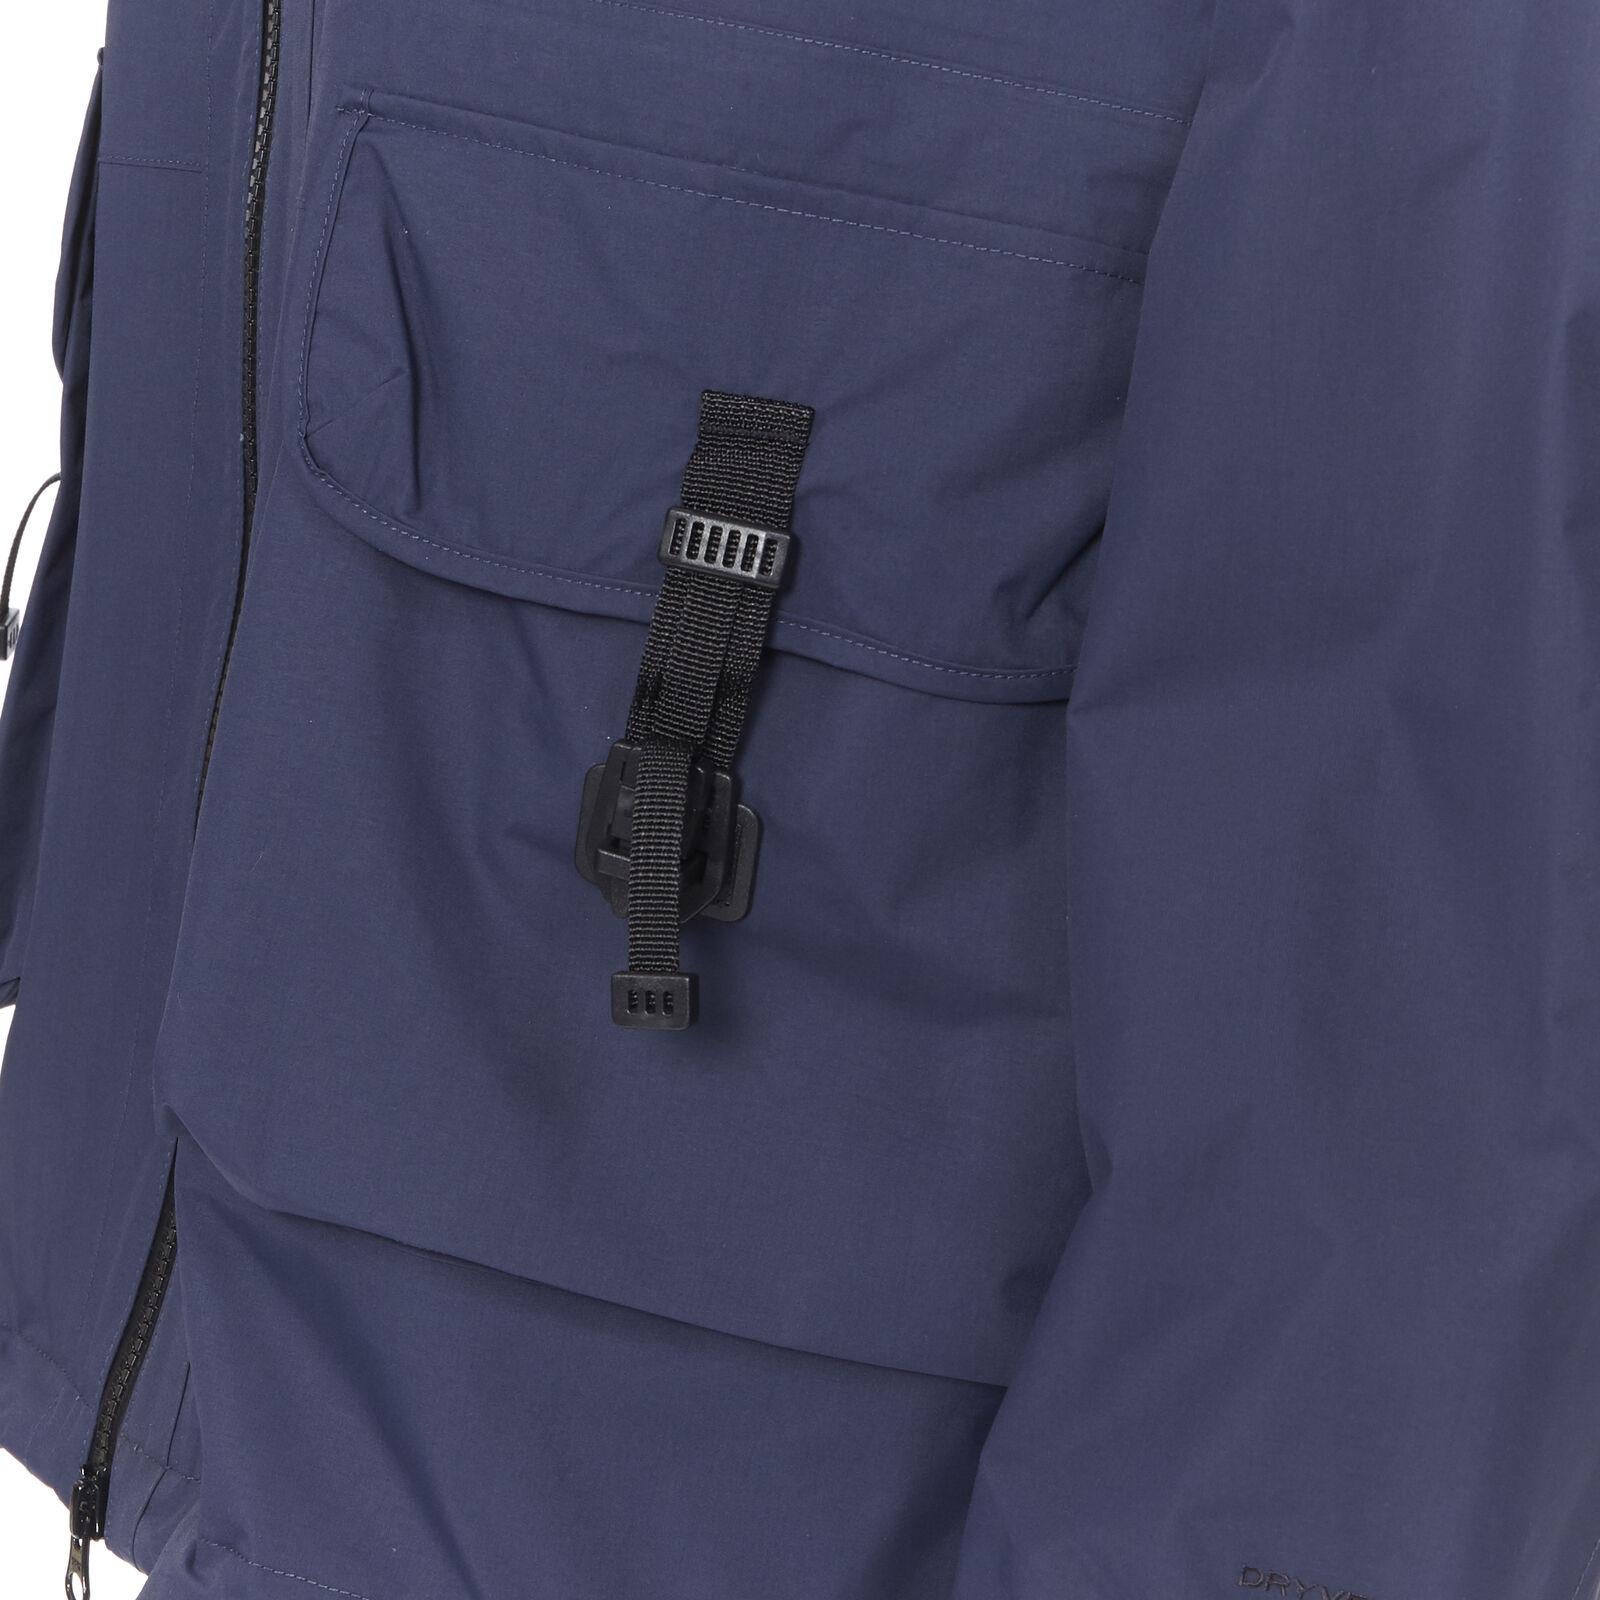 new THE NORTH FACE Black Series KK Urban Explore navy utility pocket jacket L XL For Sale 5